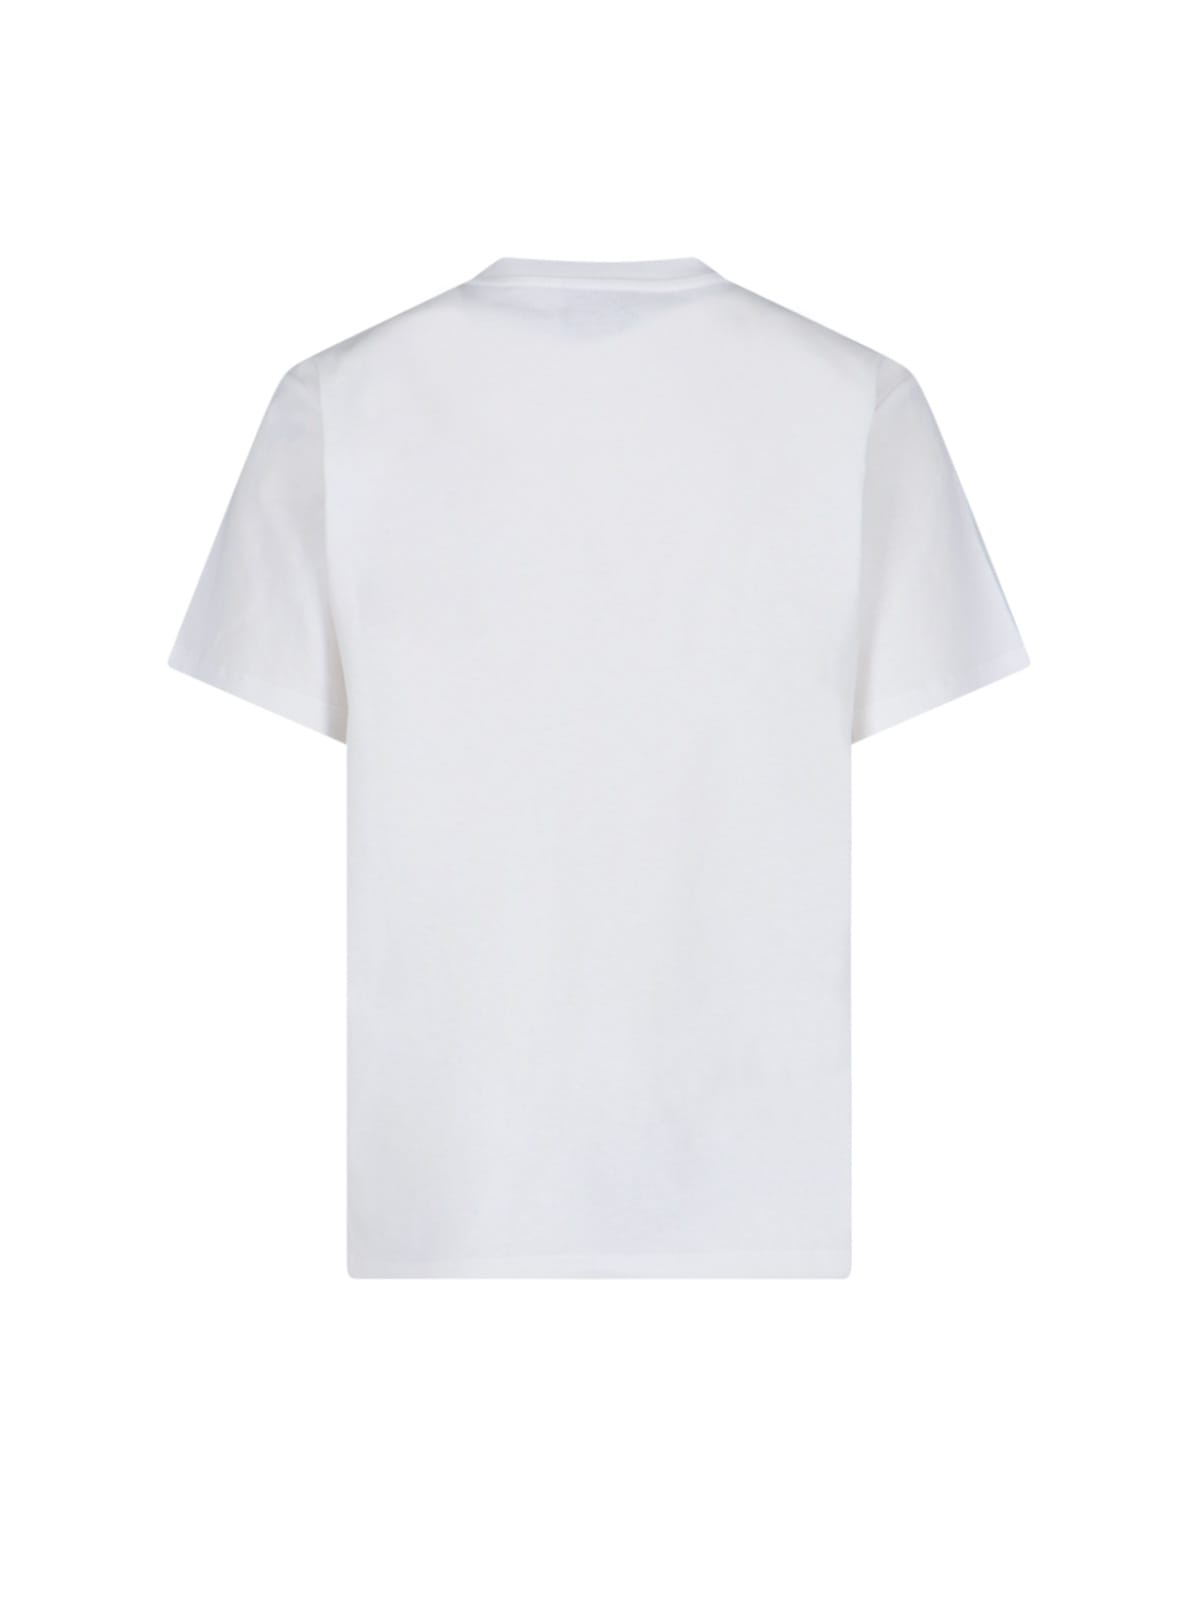 Shop Coperni Logo T-shirt In White